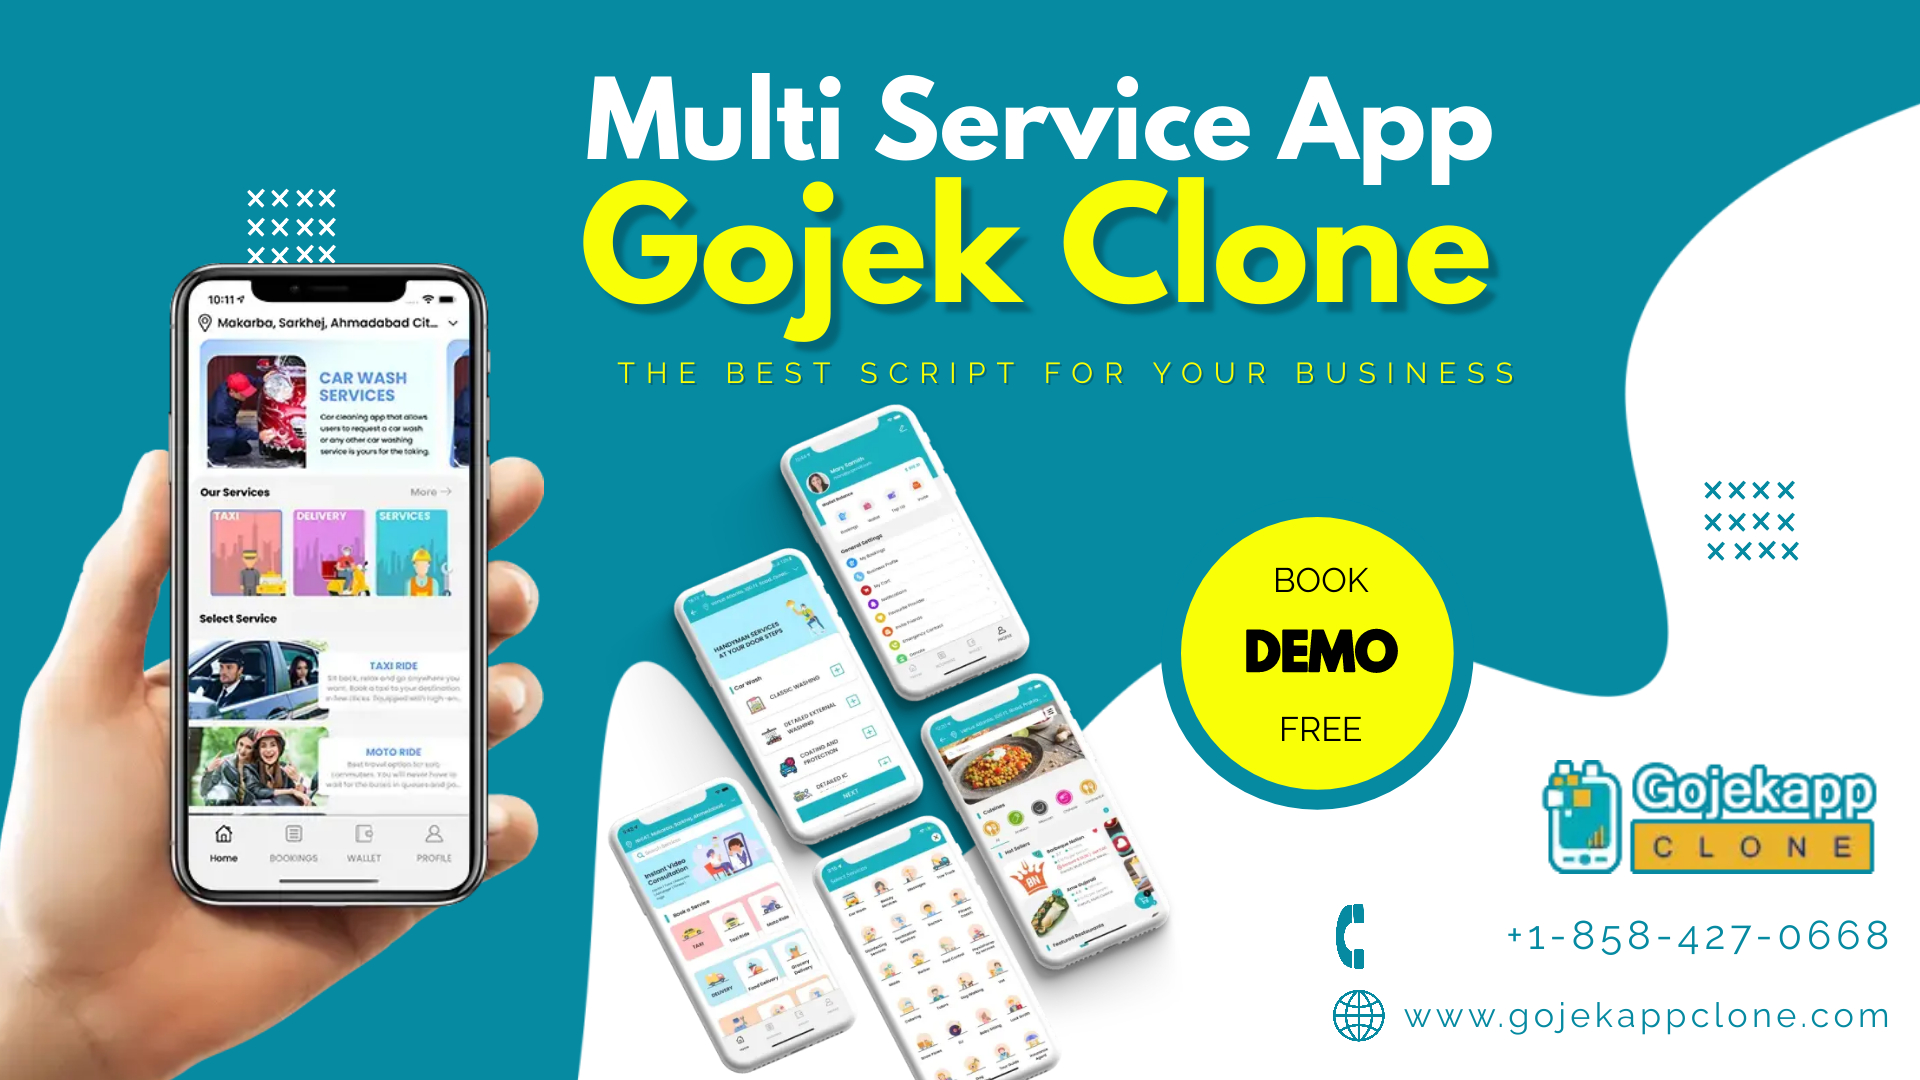 Gojek Clone – The Multi-Billion Dollar Venture Idea